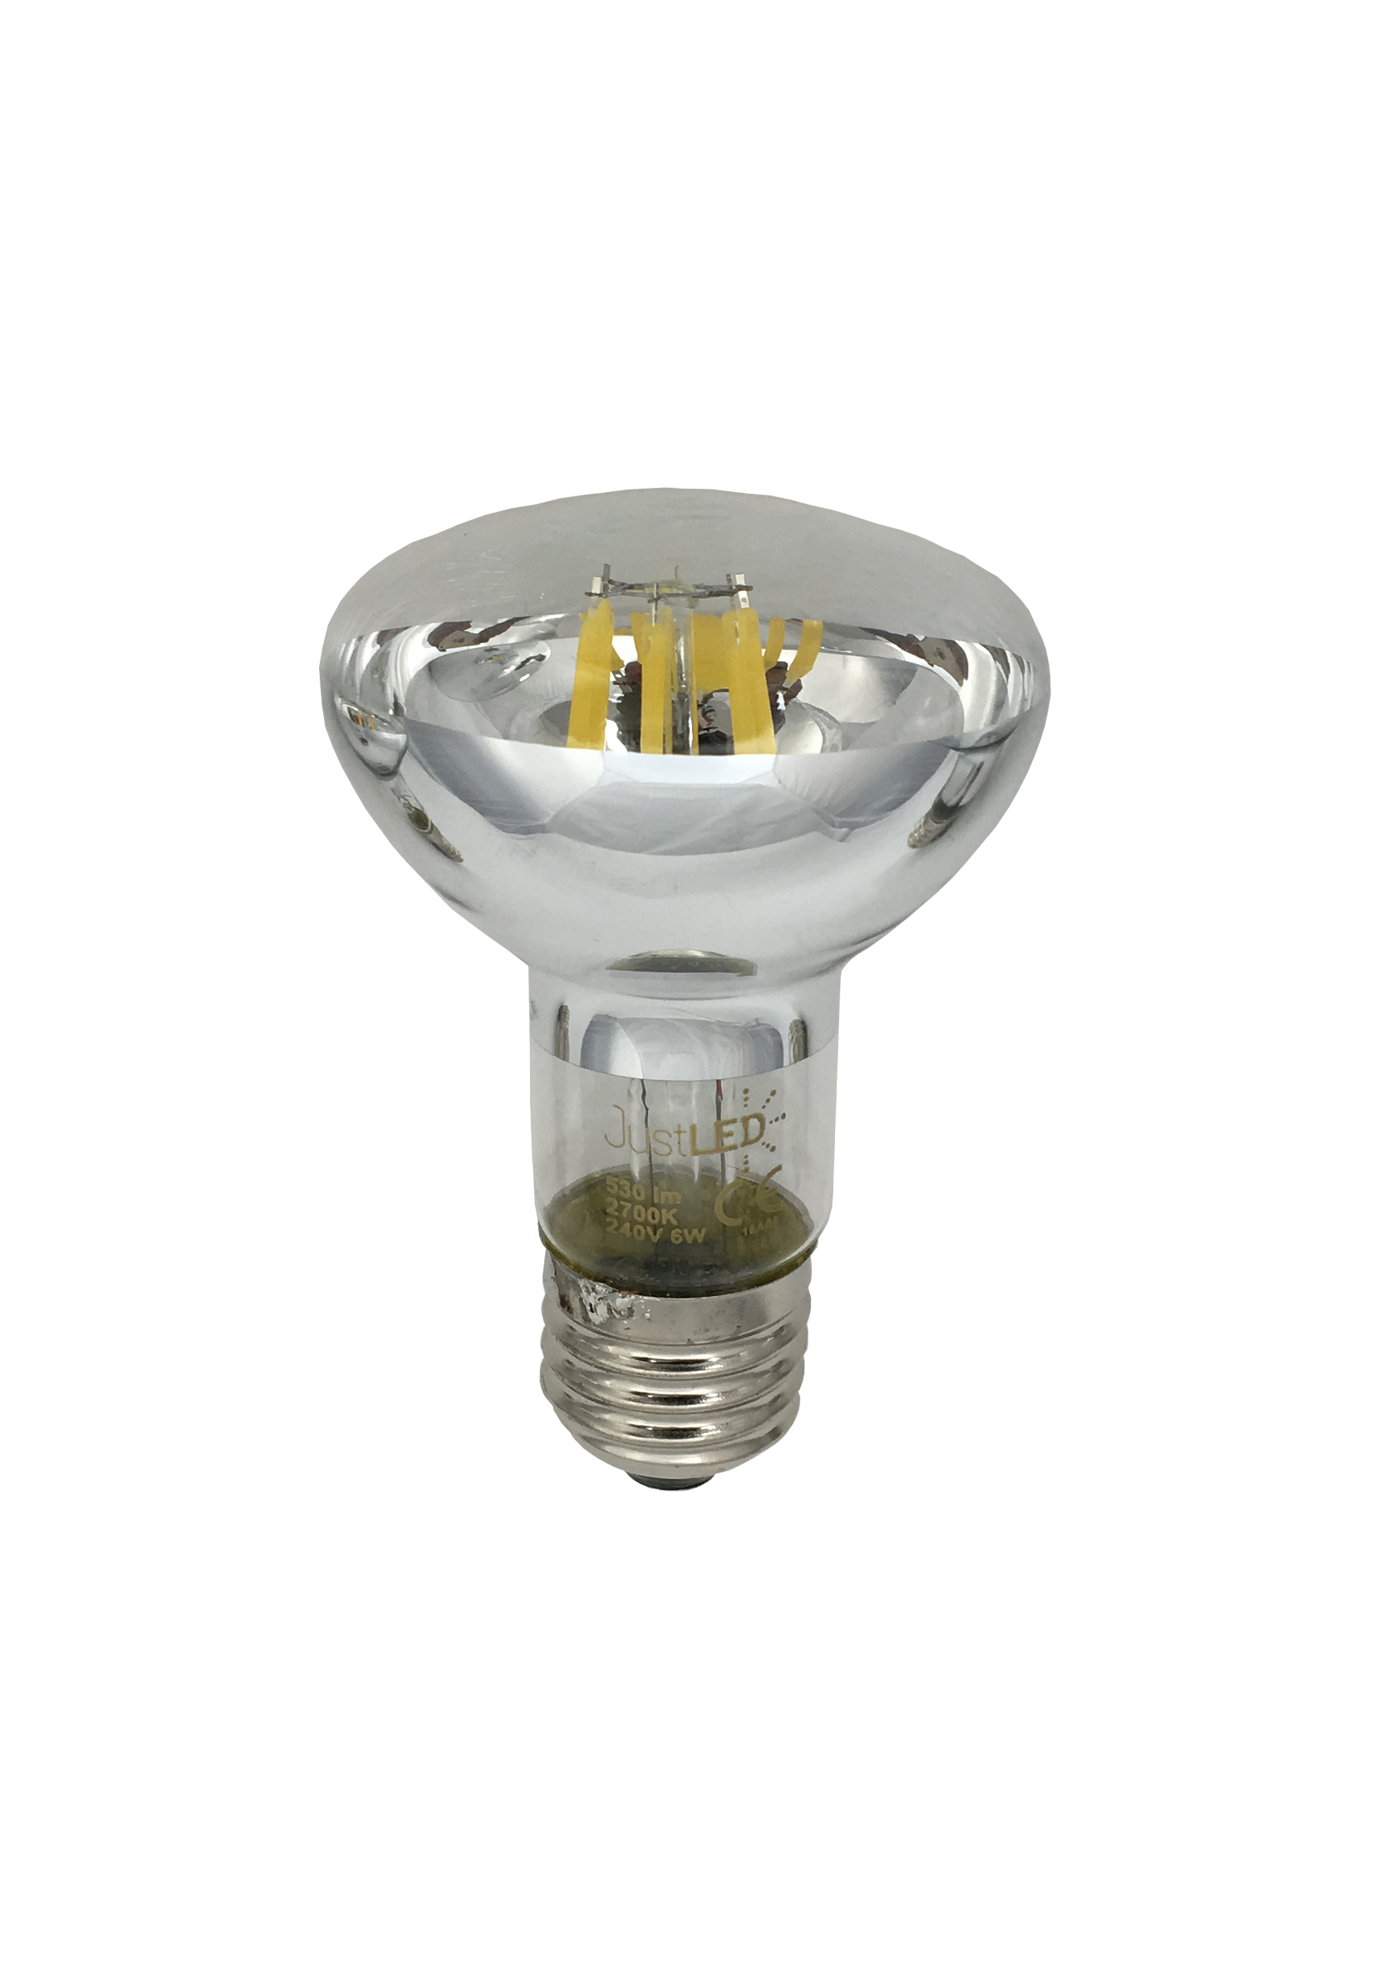 JustLED – R63 Reflector LED Spot Light Bulb [Energy Class A++]